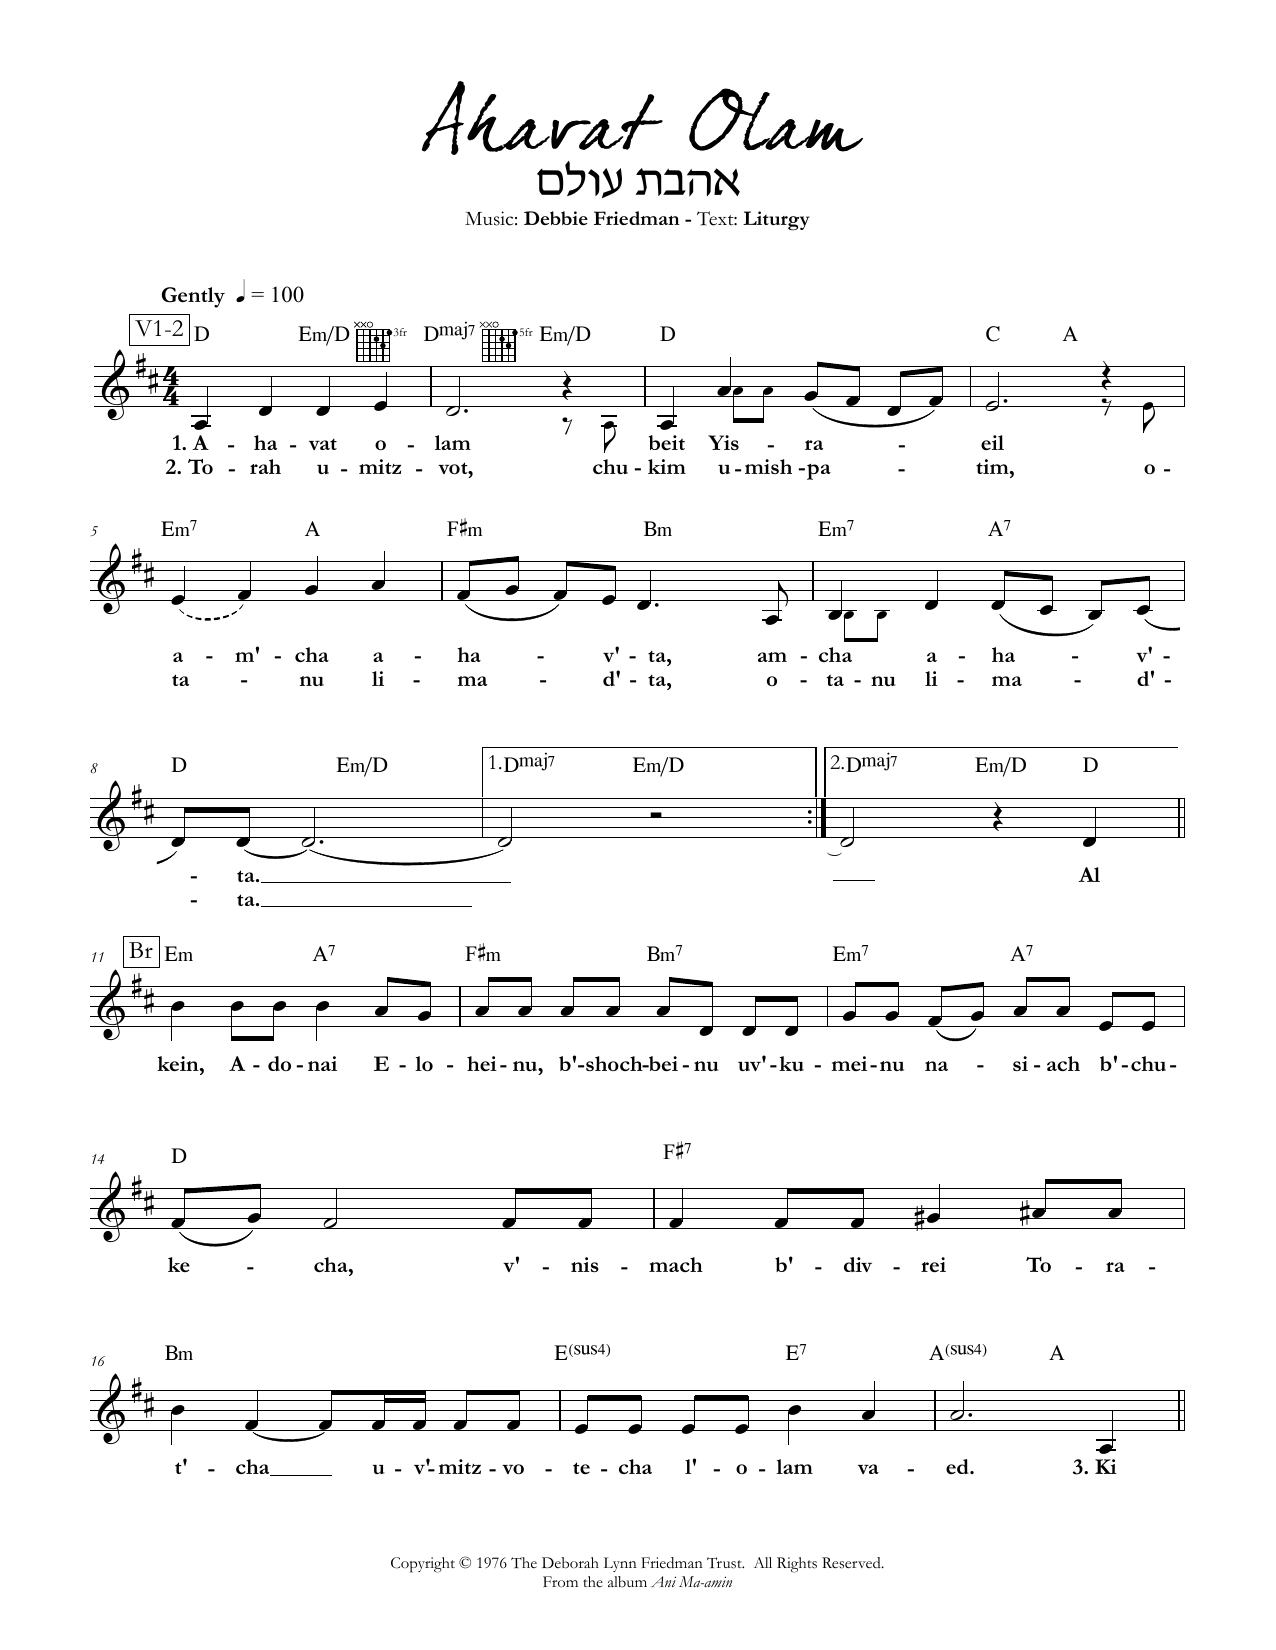 Debbie Friedman Ahavat Olam Sheet Music Notes & Chords for Lead Sheet / Fake Book - Download or Print PDF